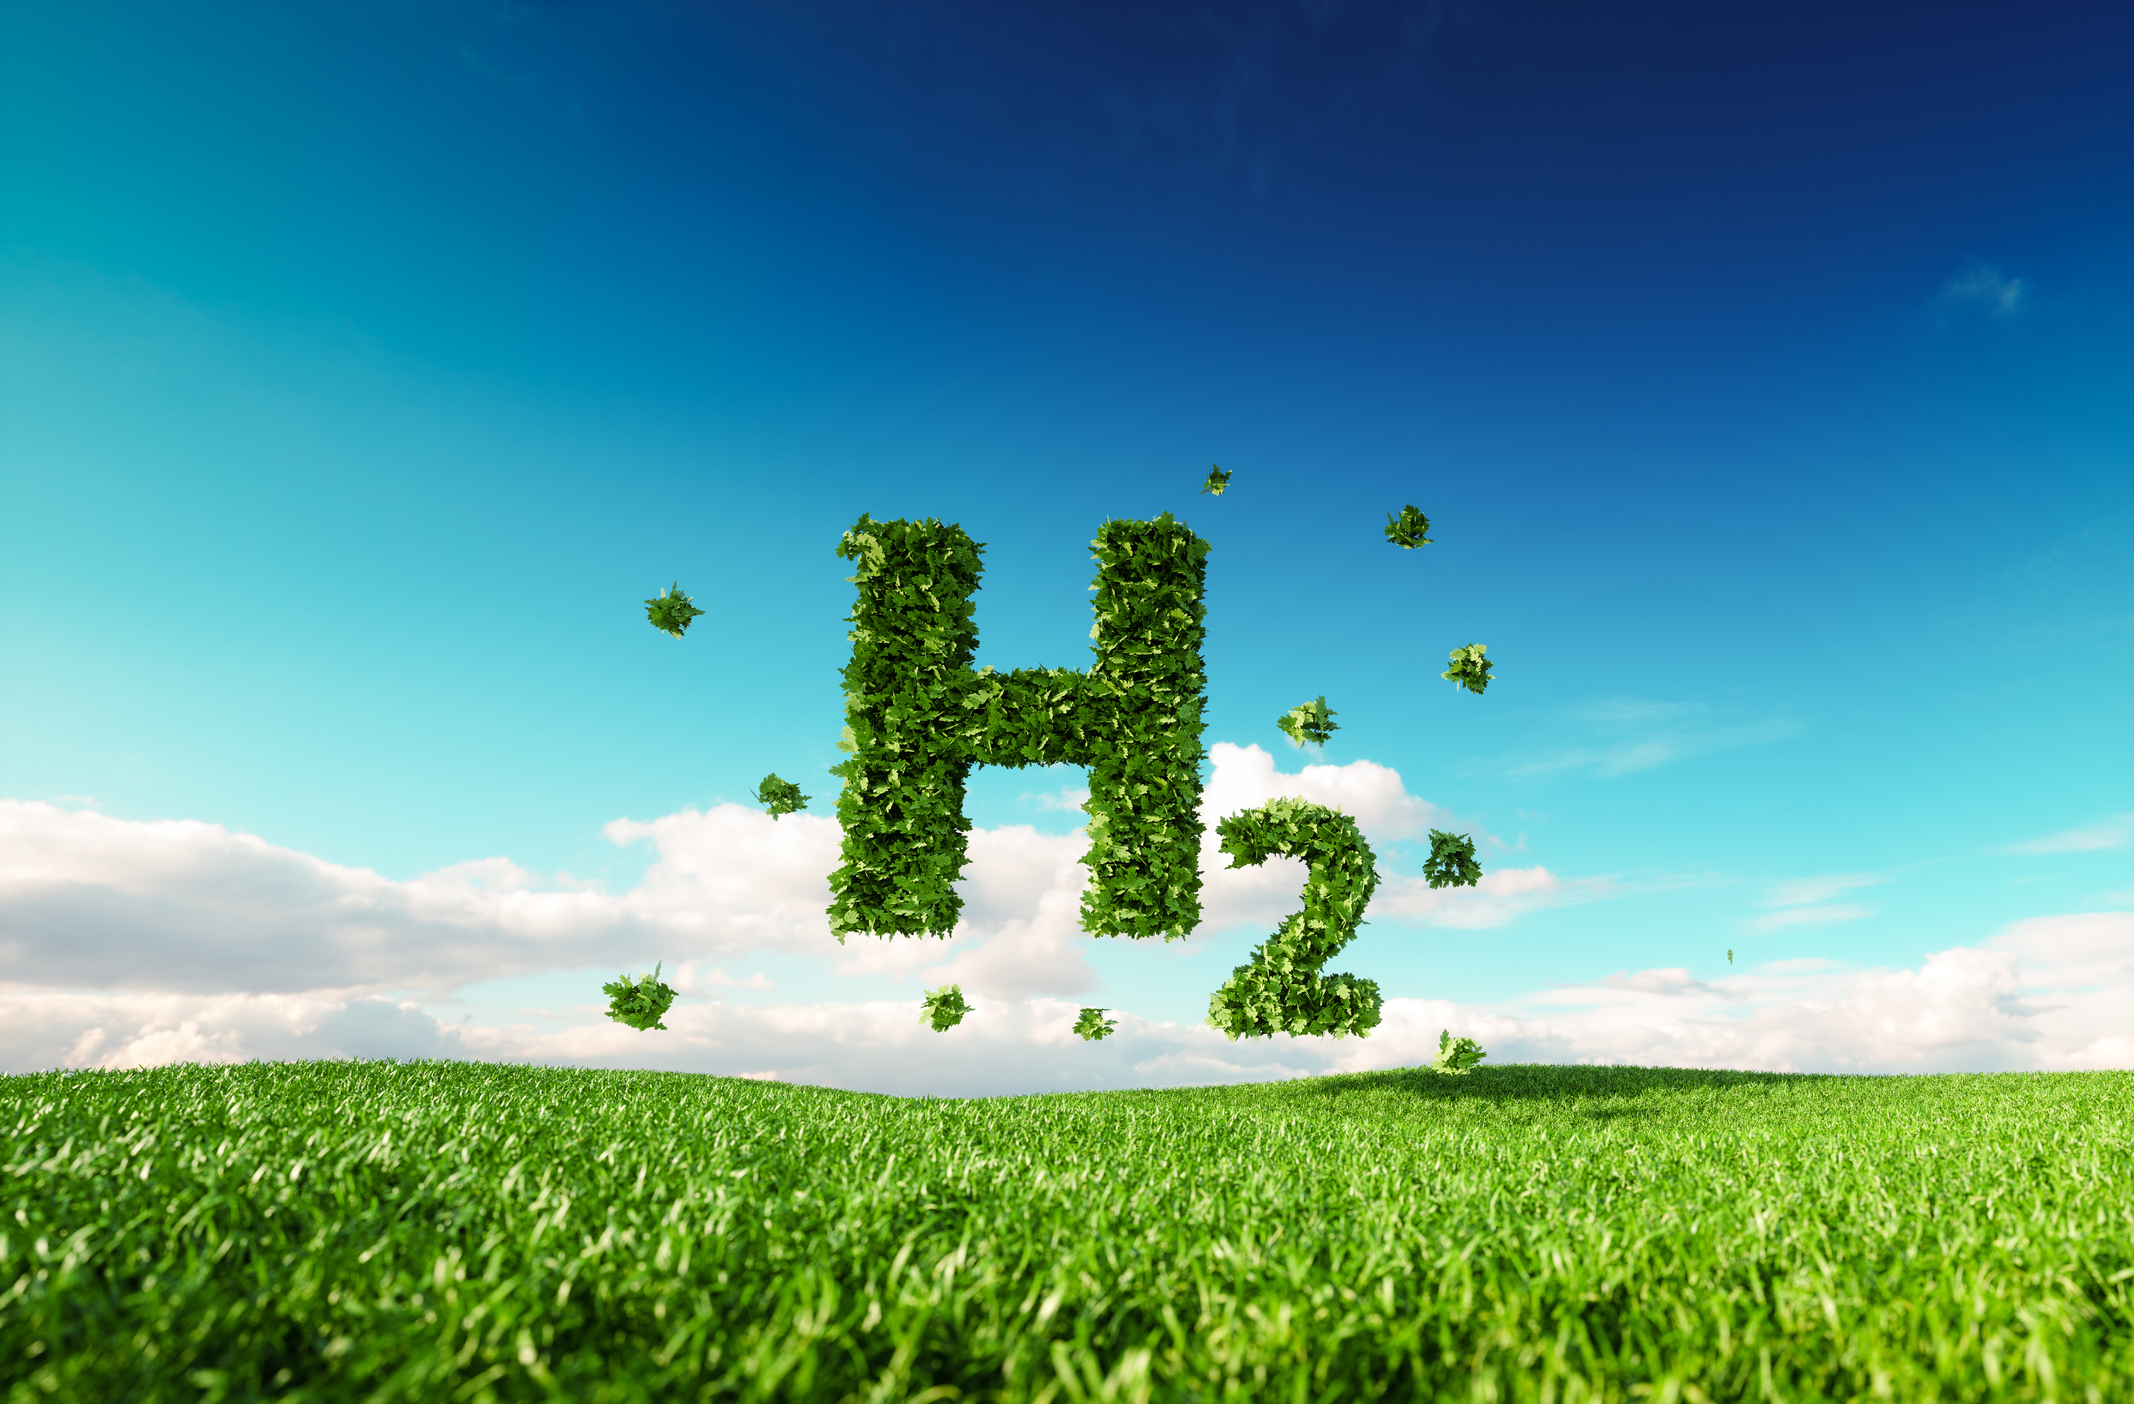 Green hydrogen over a grassy field.